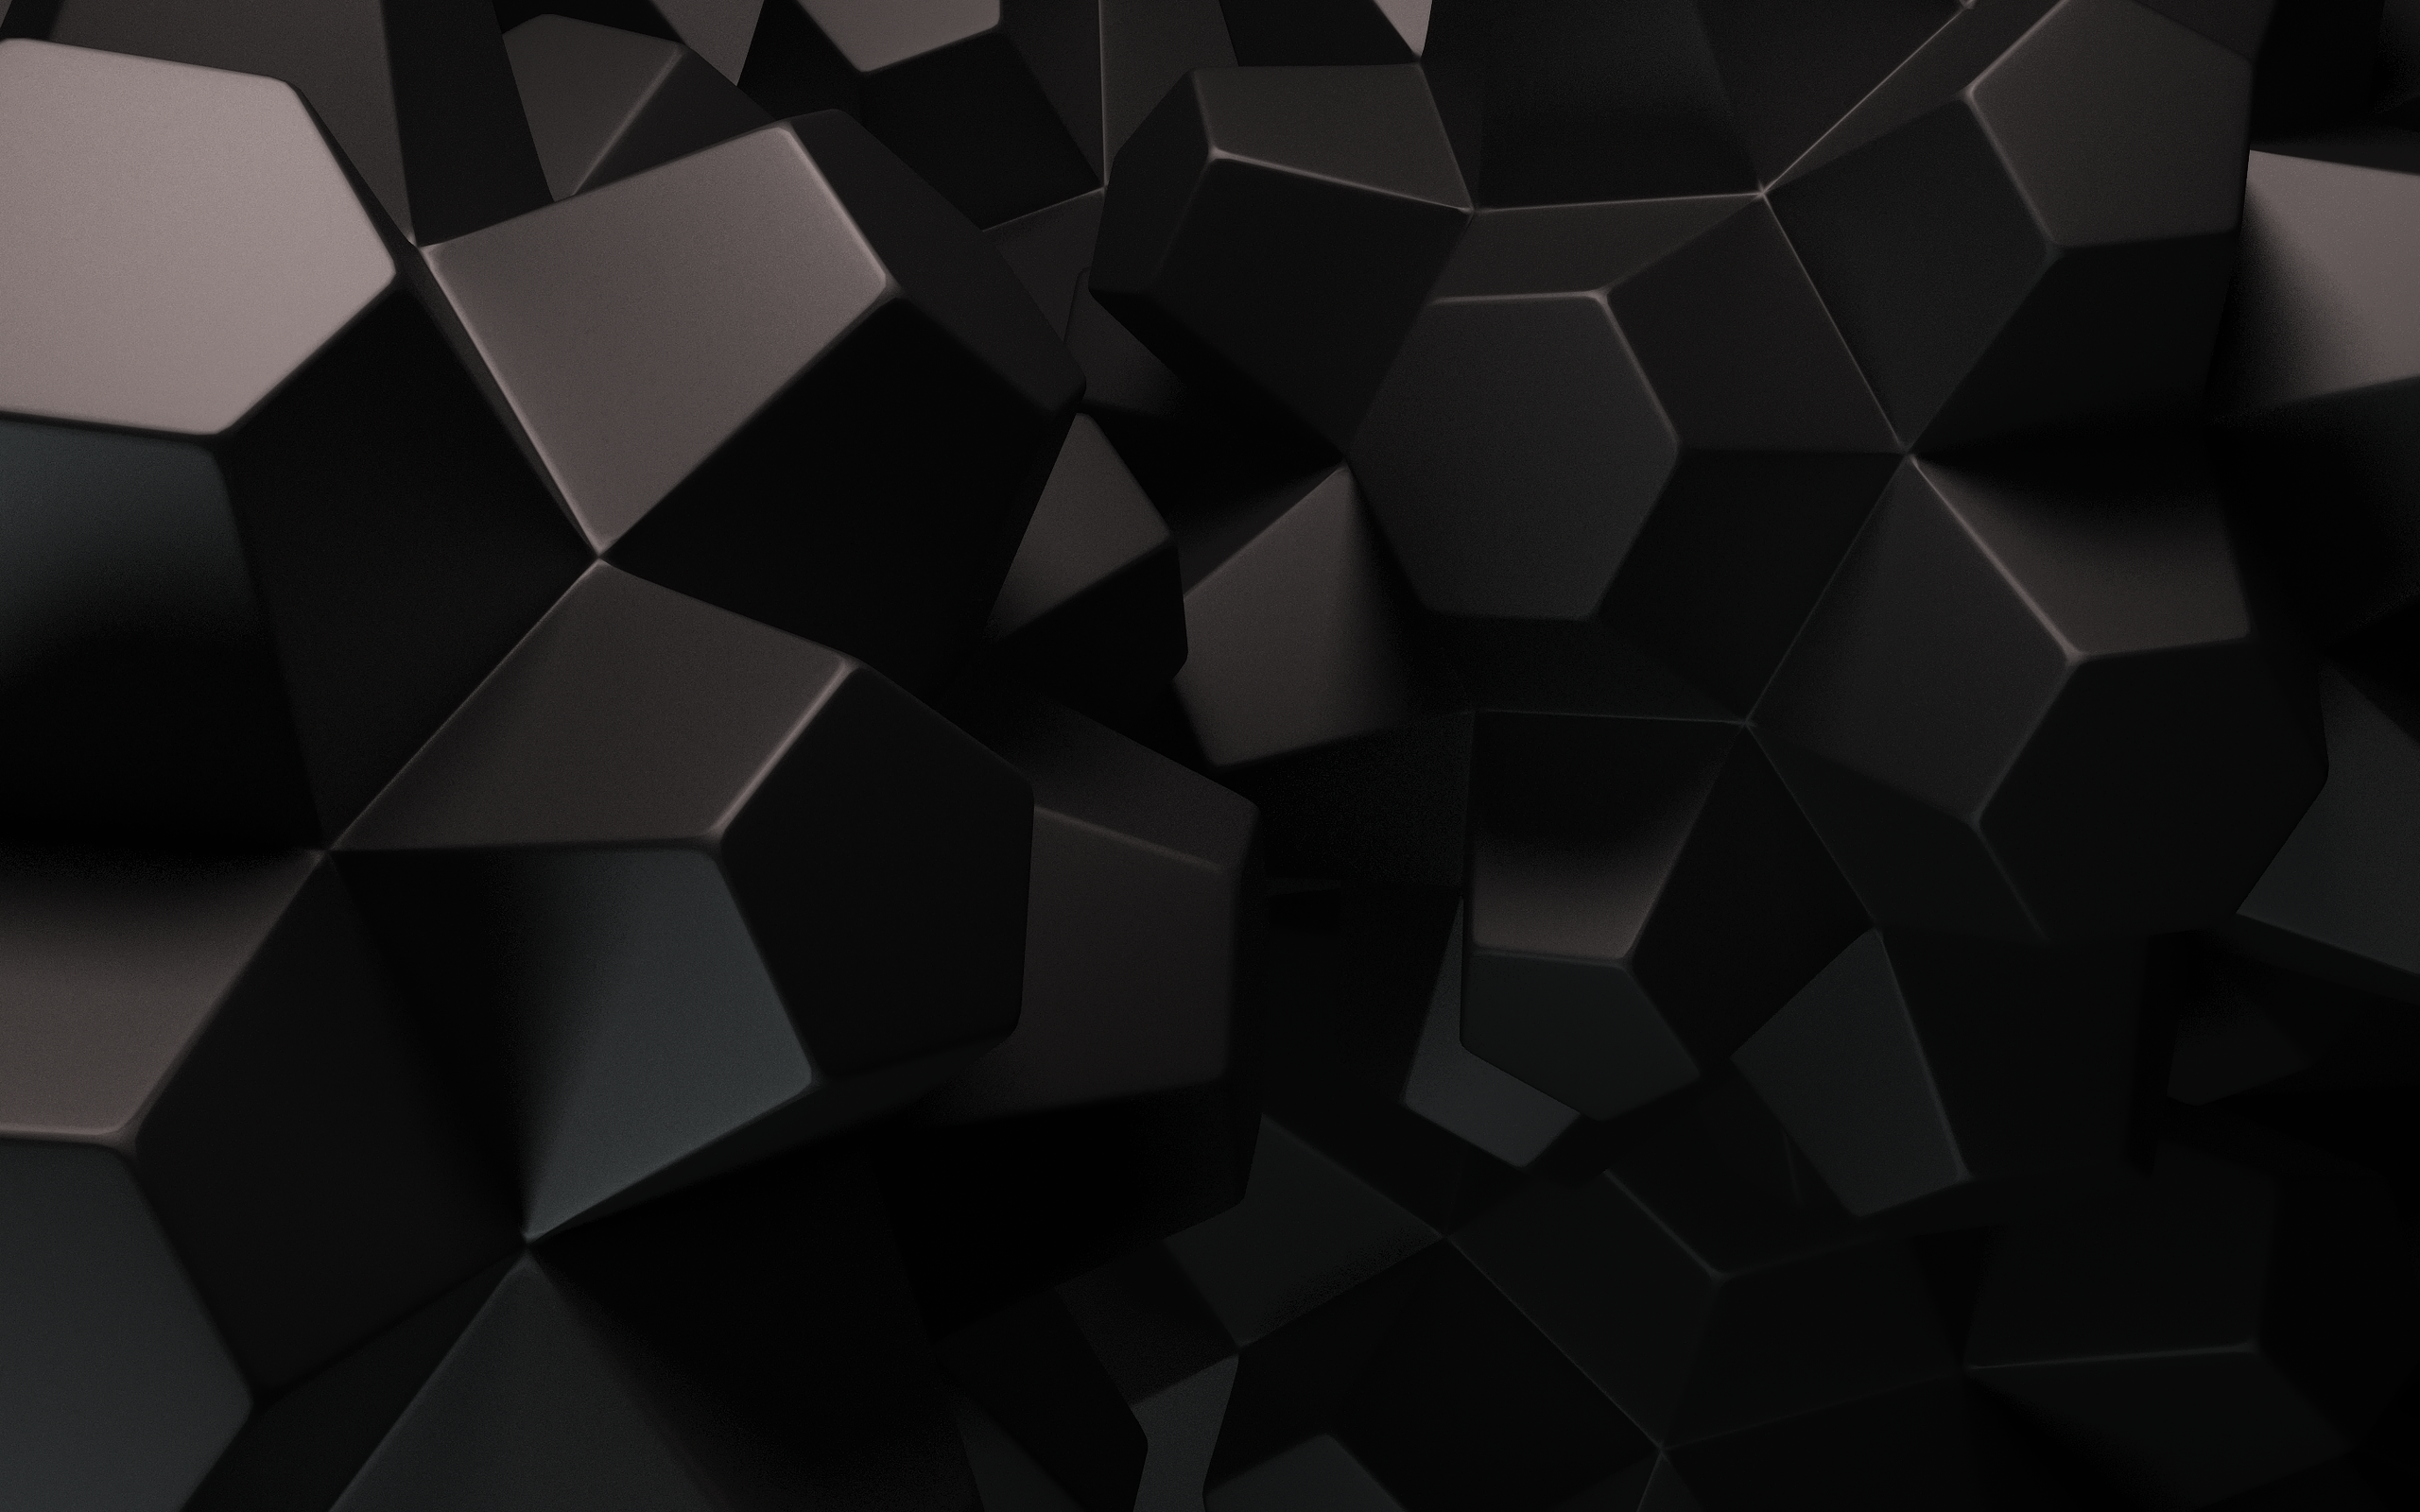 2560x1600 Free Download Funmozar Black Geometric Wallpaper 2560x1600 For Your Desktop Mobile Tablet Explore Geometric Black And White Wallpaper Modern Geometric Wallpaper Large Geometric Wallpaper Gray And White Geometric Wallpaper